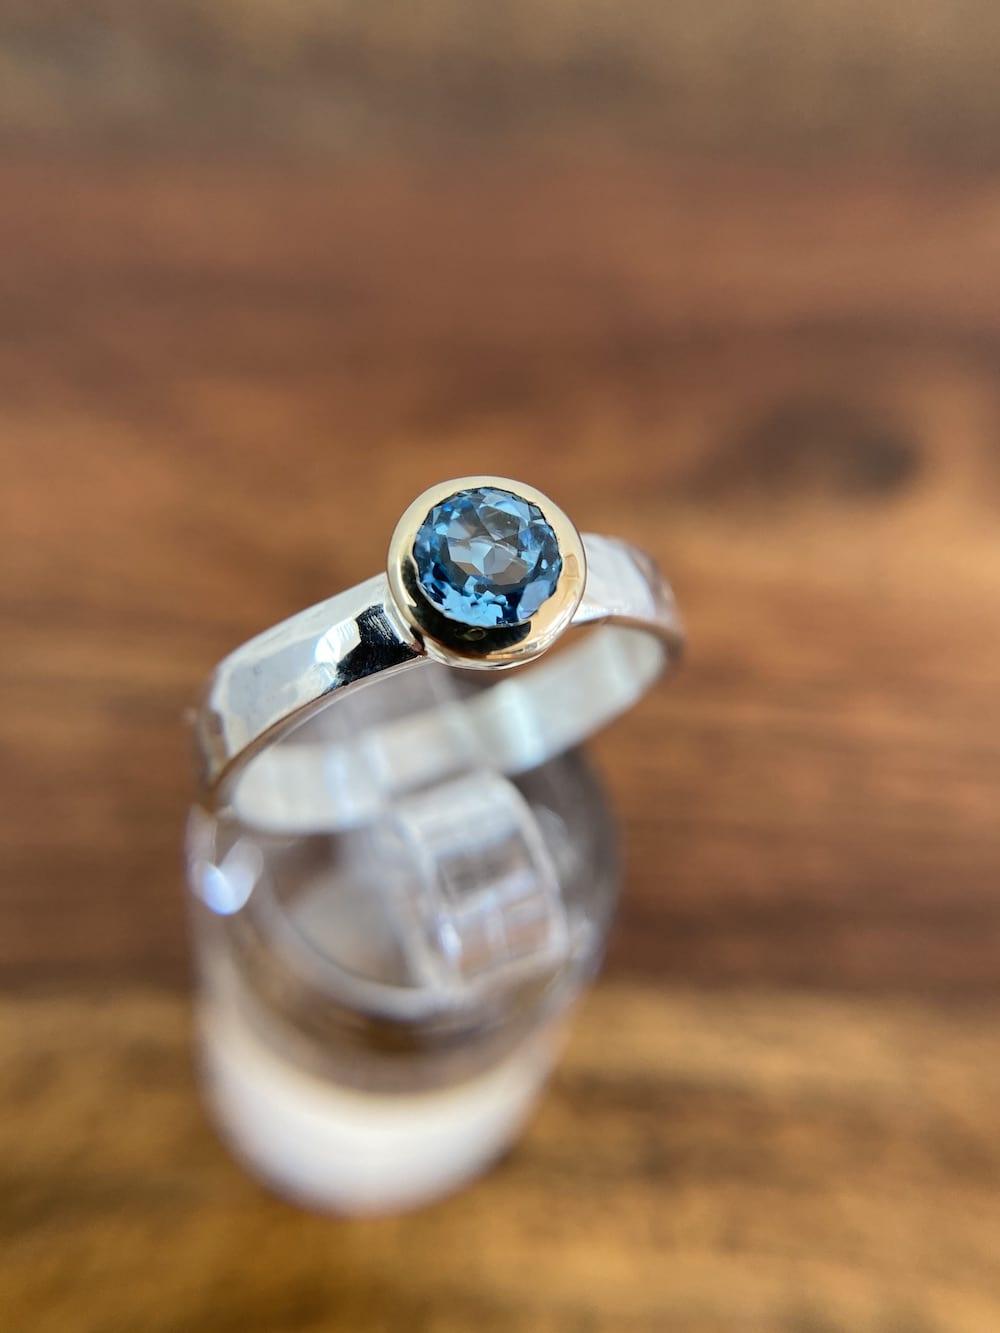 Yaron Morhaim 9ct Gold & Swiss Blue Topaz Ring - Rococo Jewellery